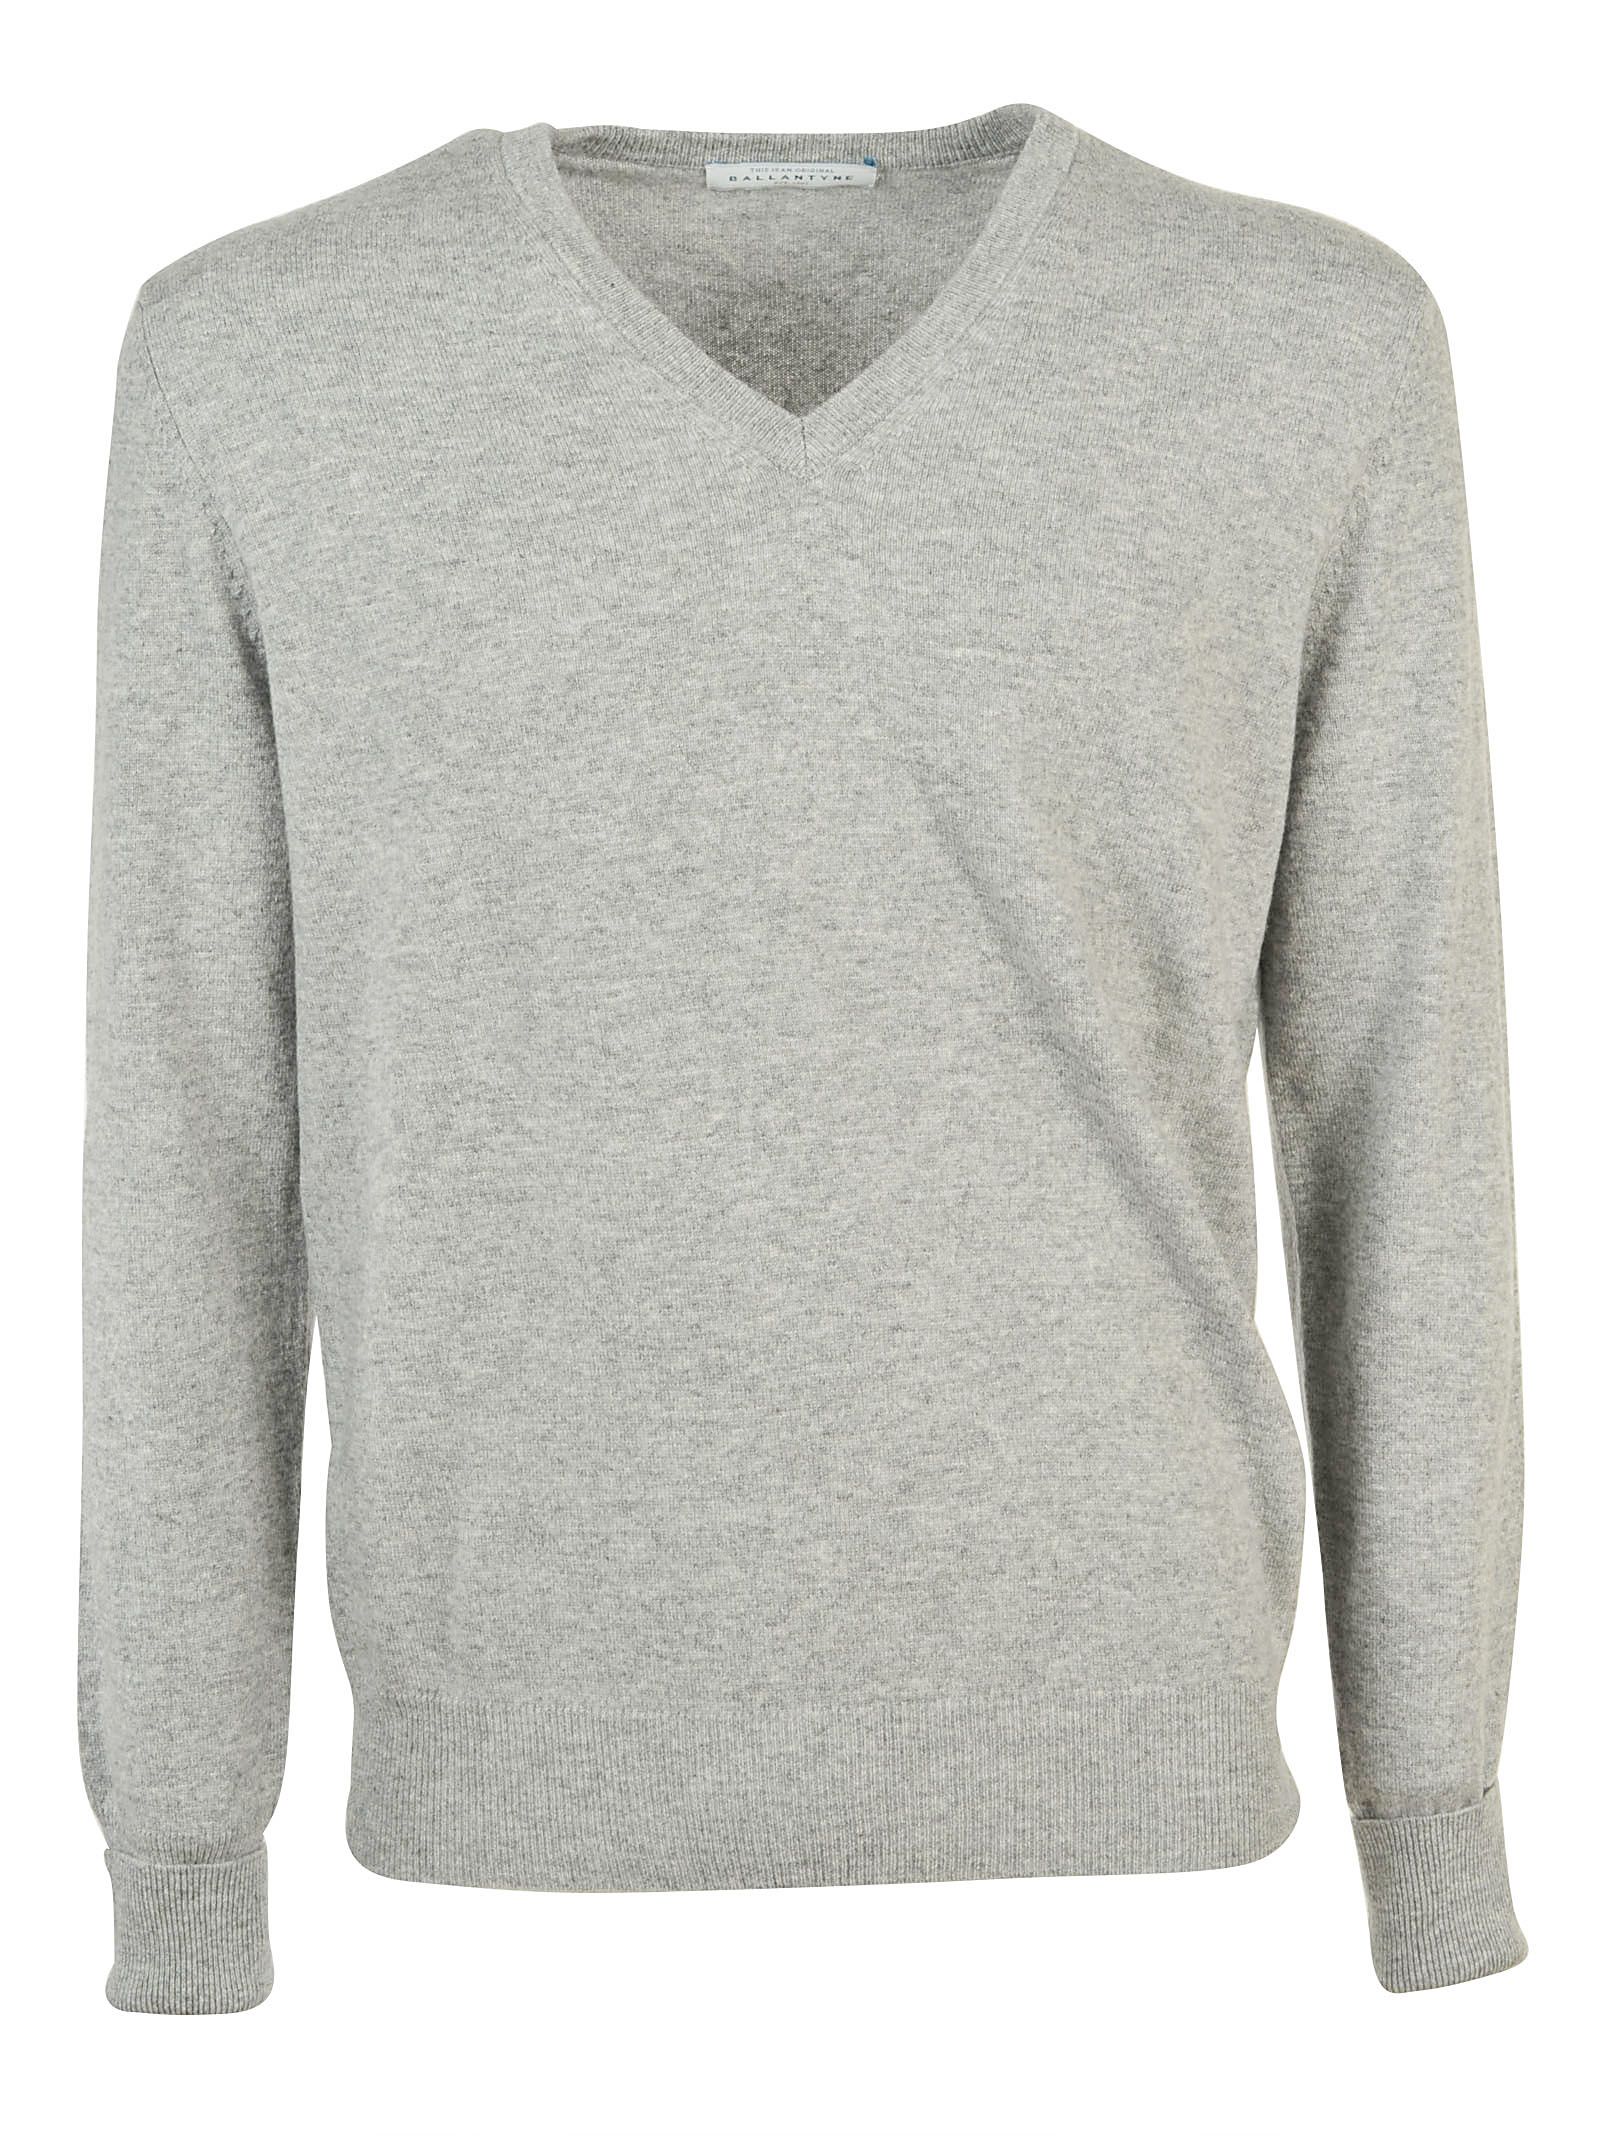 Ballantyne - Ballantyne Cashmere Sweater - Gray, Men's Sweaters | Italist